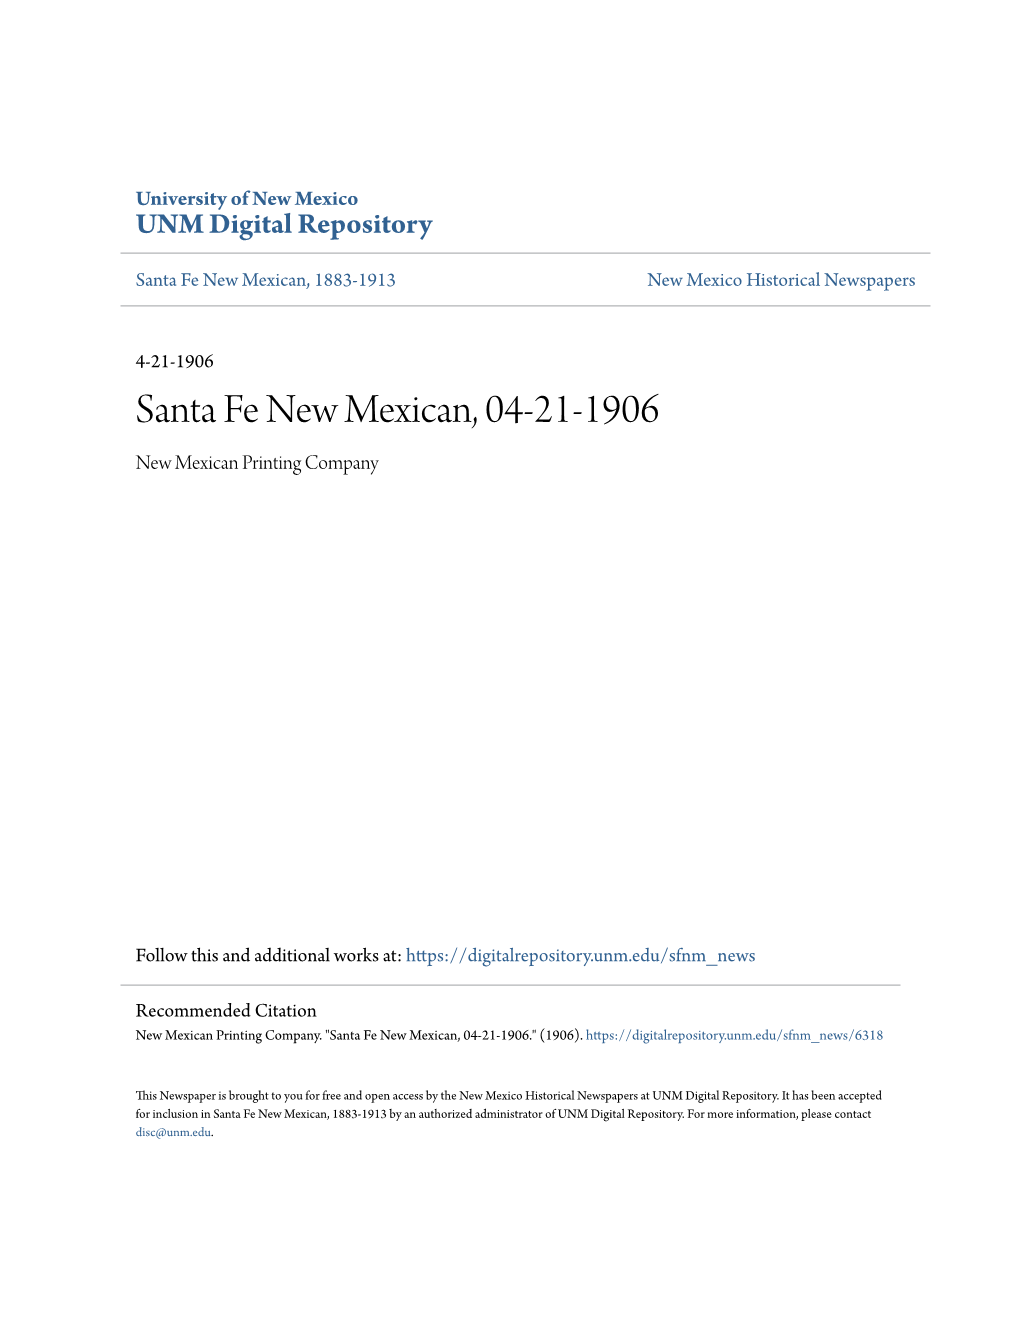 Santa Fe New Mexican, 04-21-1906 New Mexican Printing Company